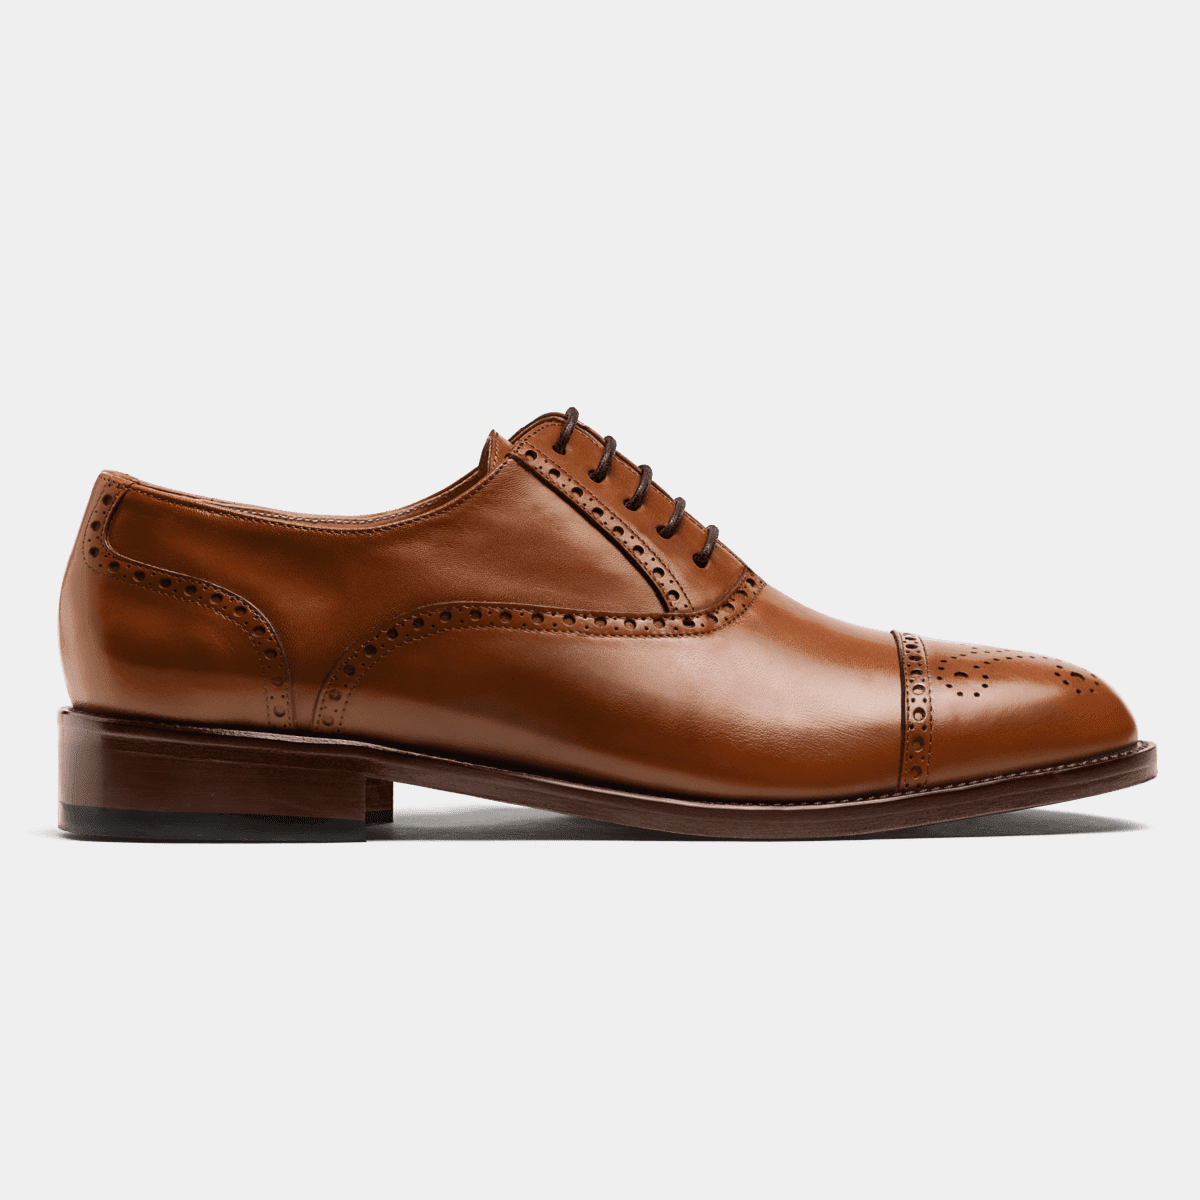 Brogues - brown italian calf leather